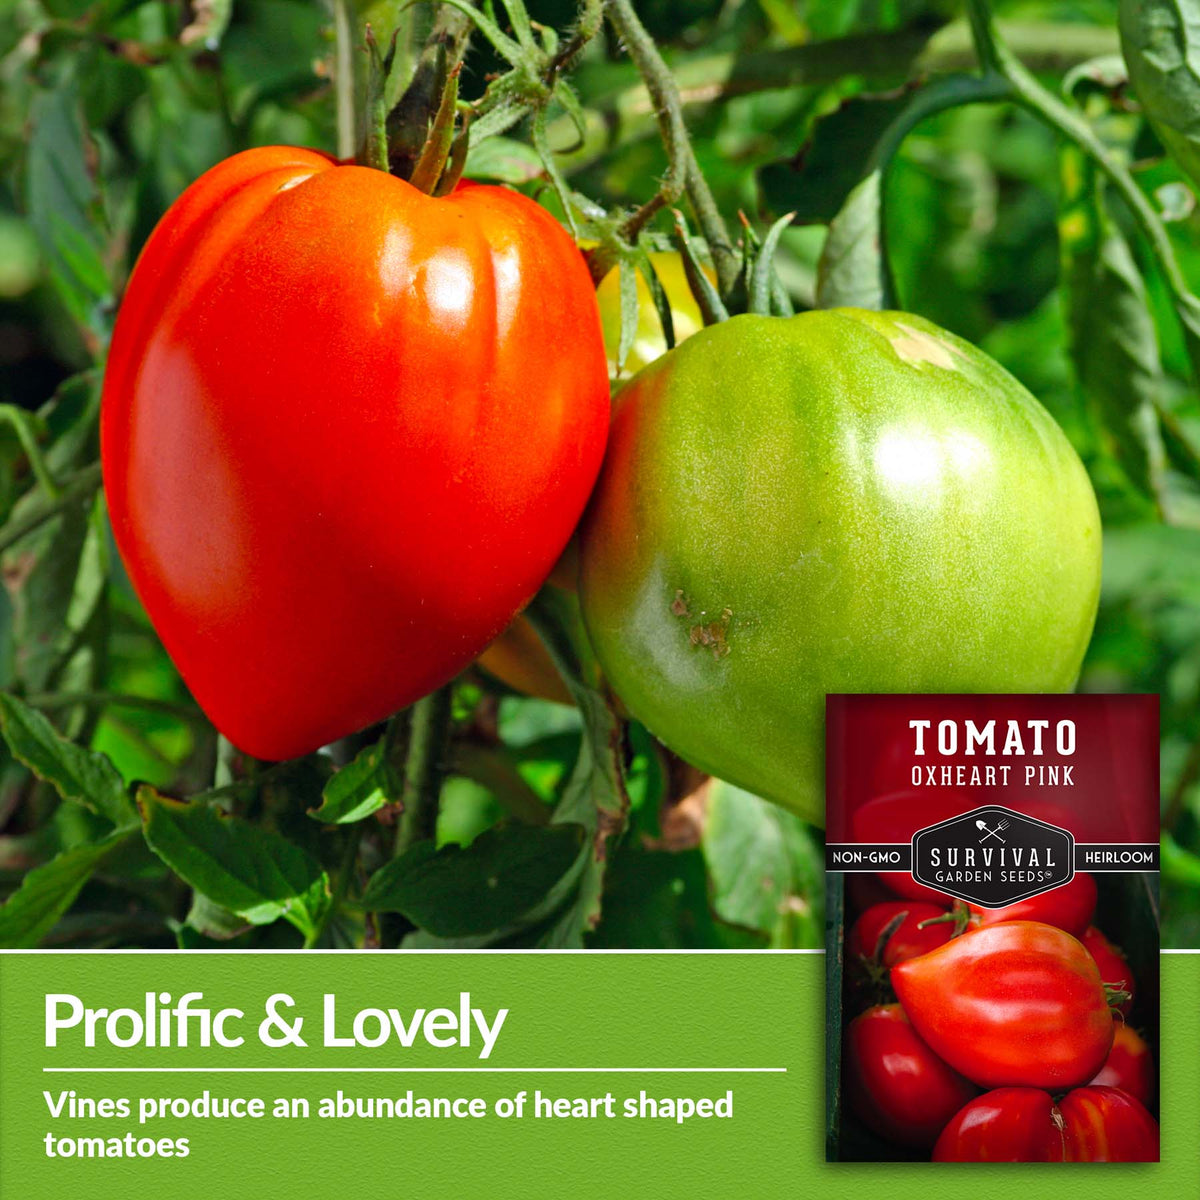 Oxheart Pink Tomato vines produce an abundance of heart shaped tomatoes